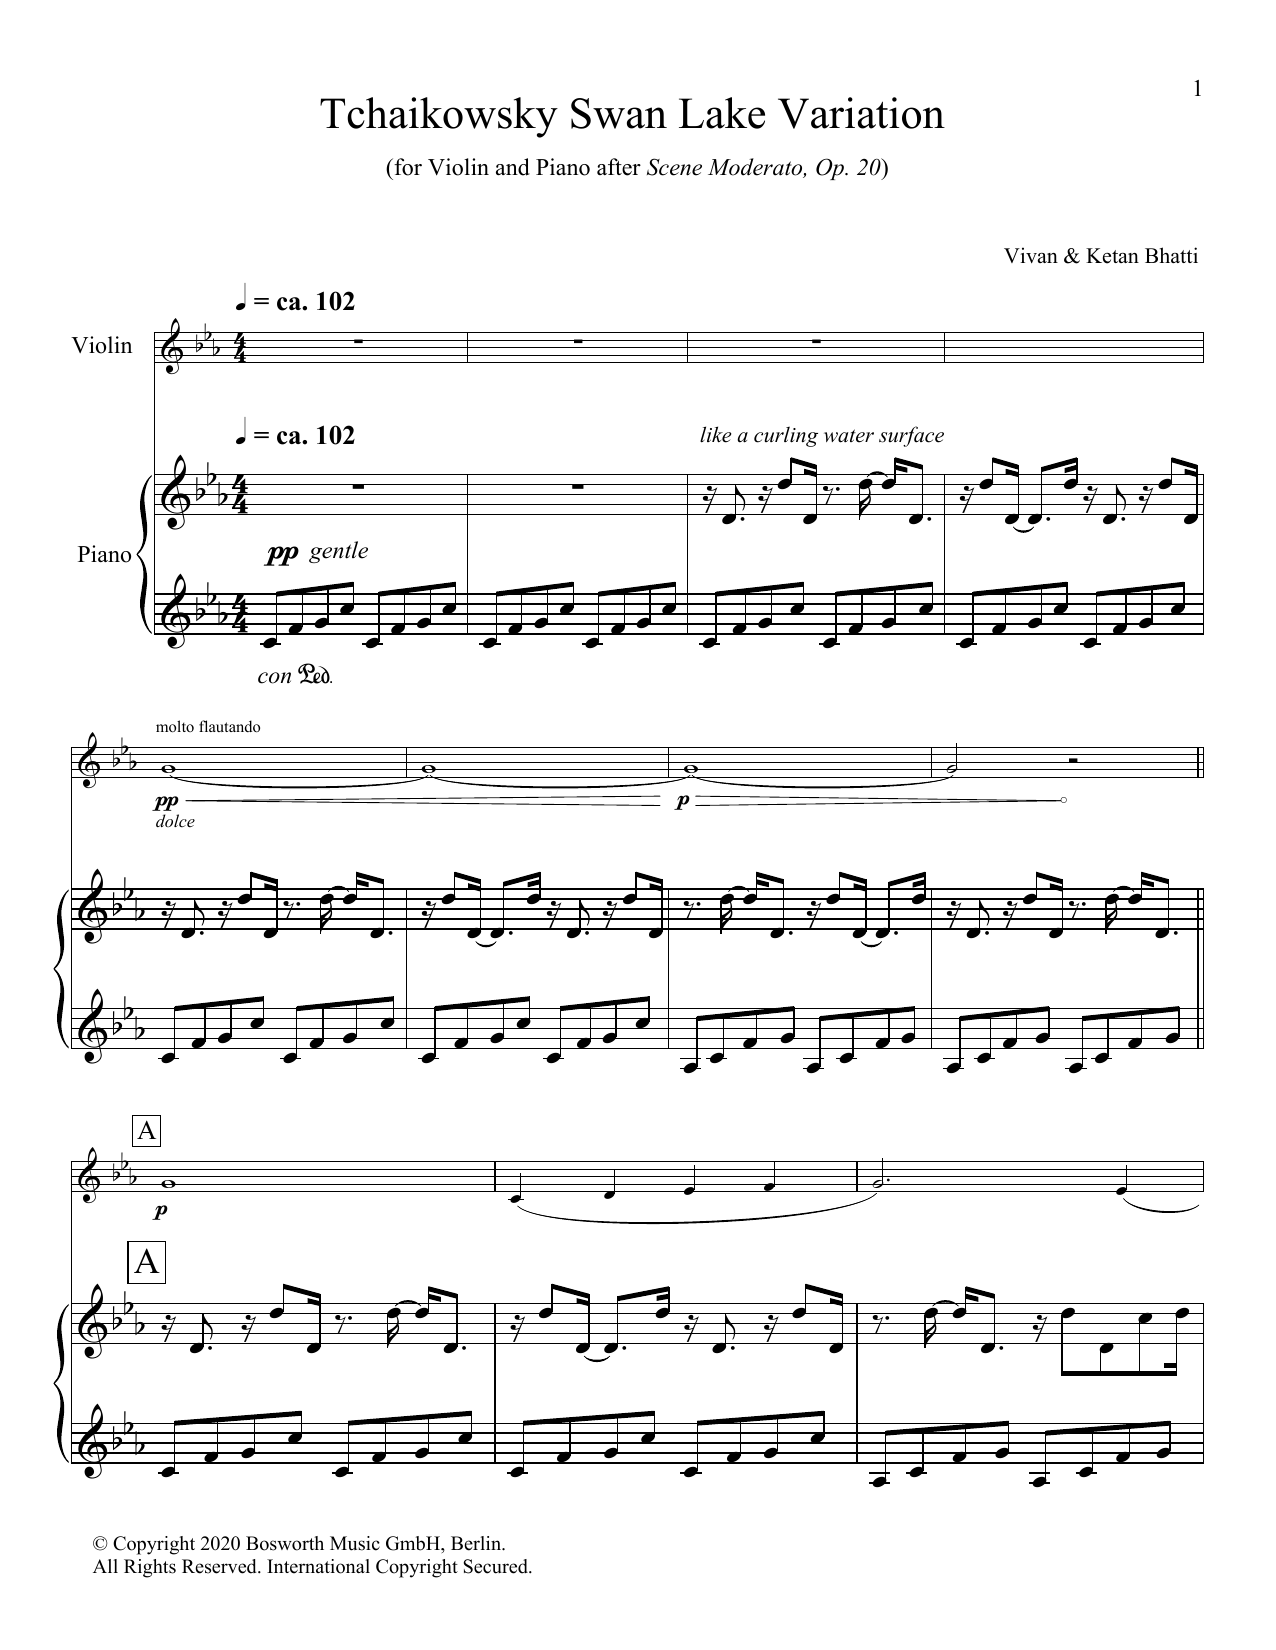 Vivan & Ketan Bhatti Tchaikowsky Swan Lake Variation sheet music notes and chords arranged for Violin and Piano